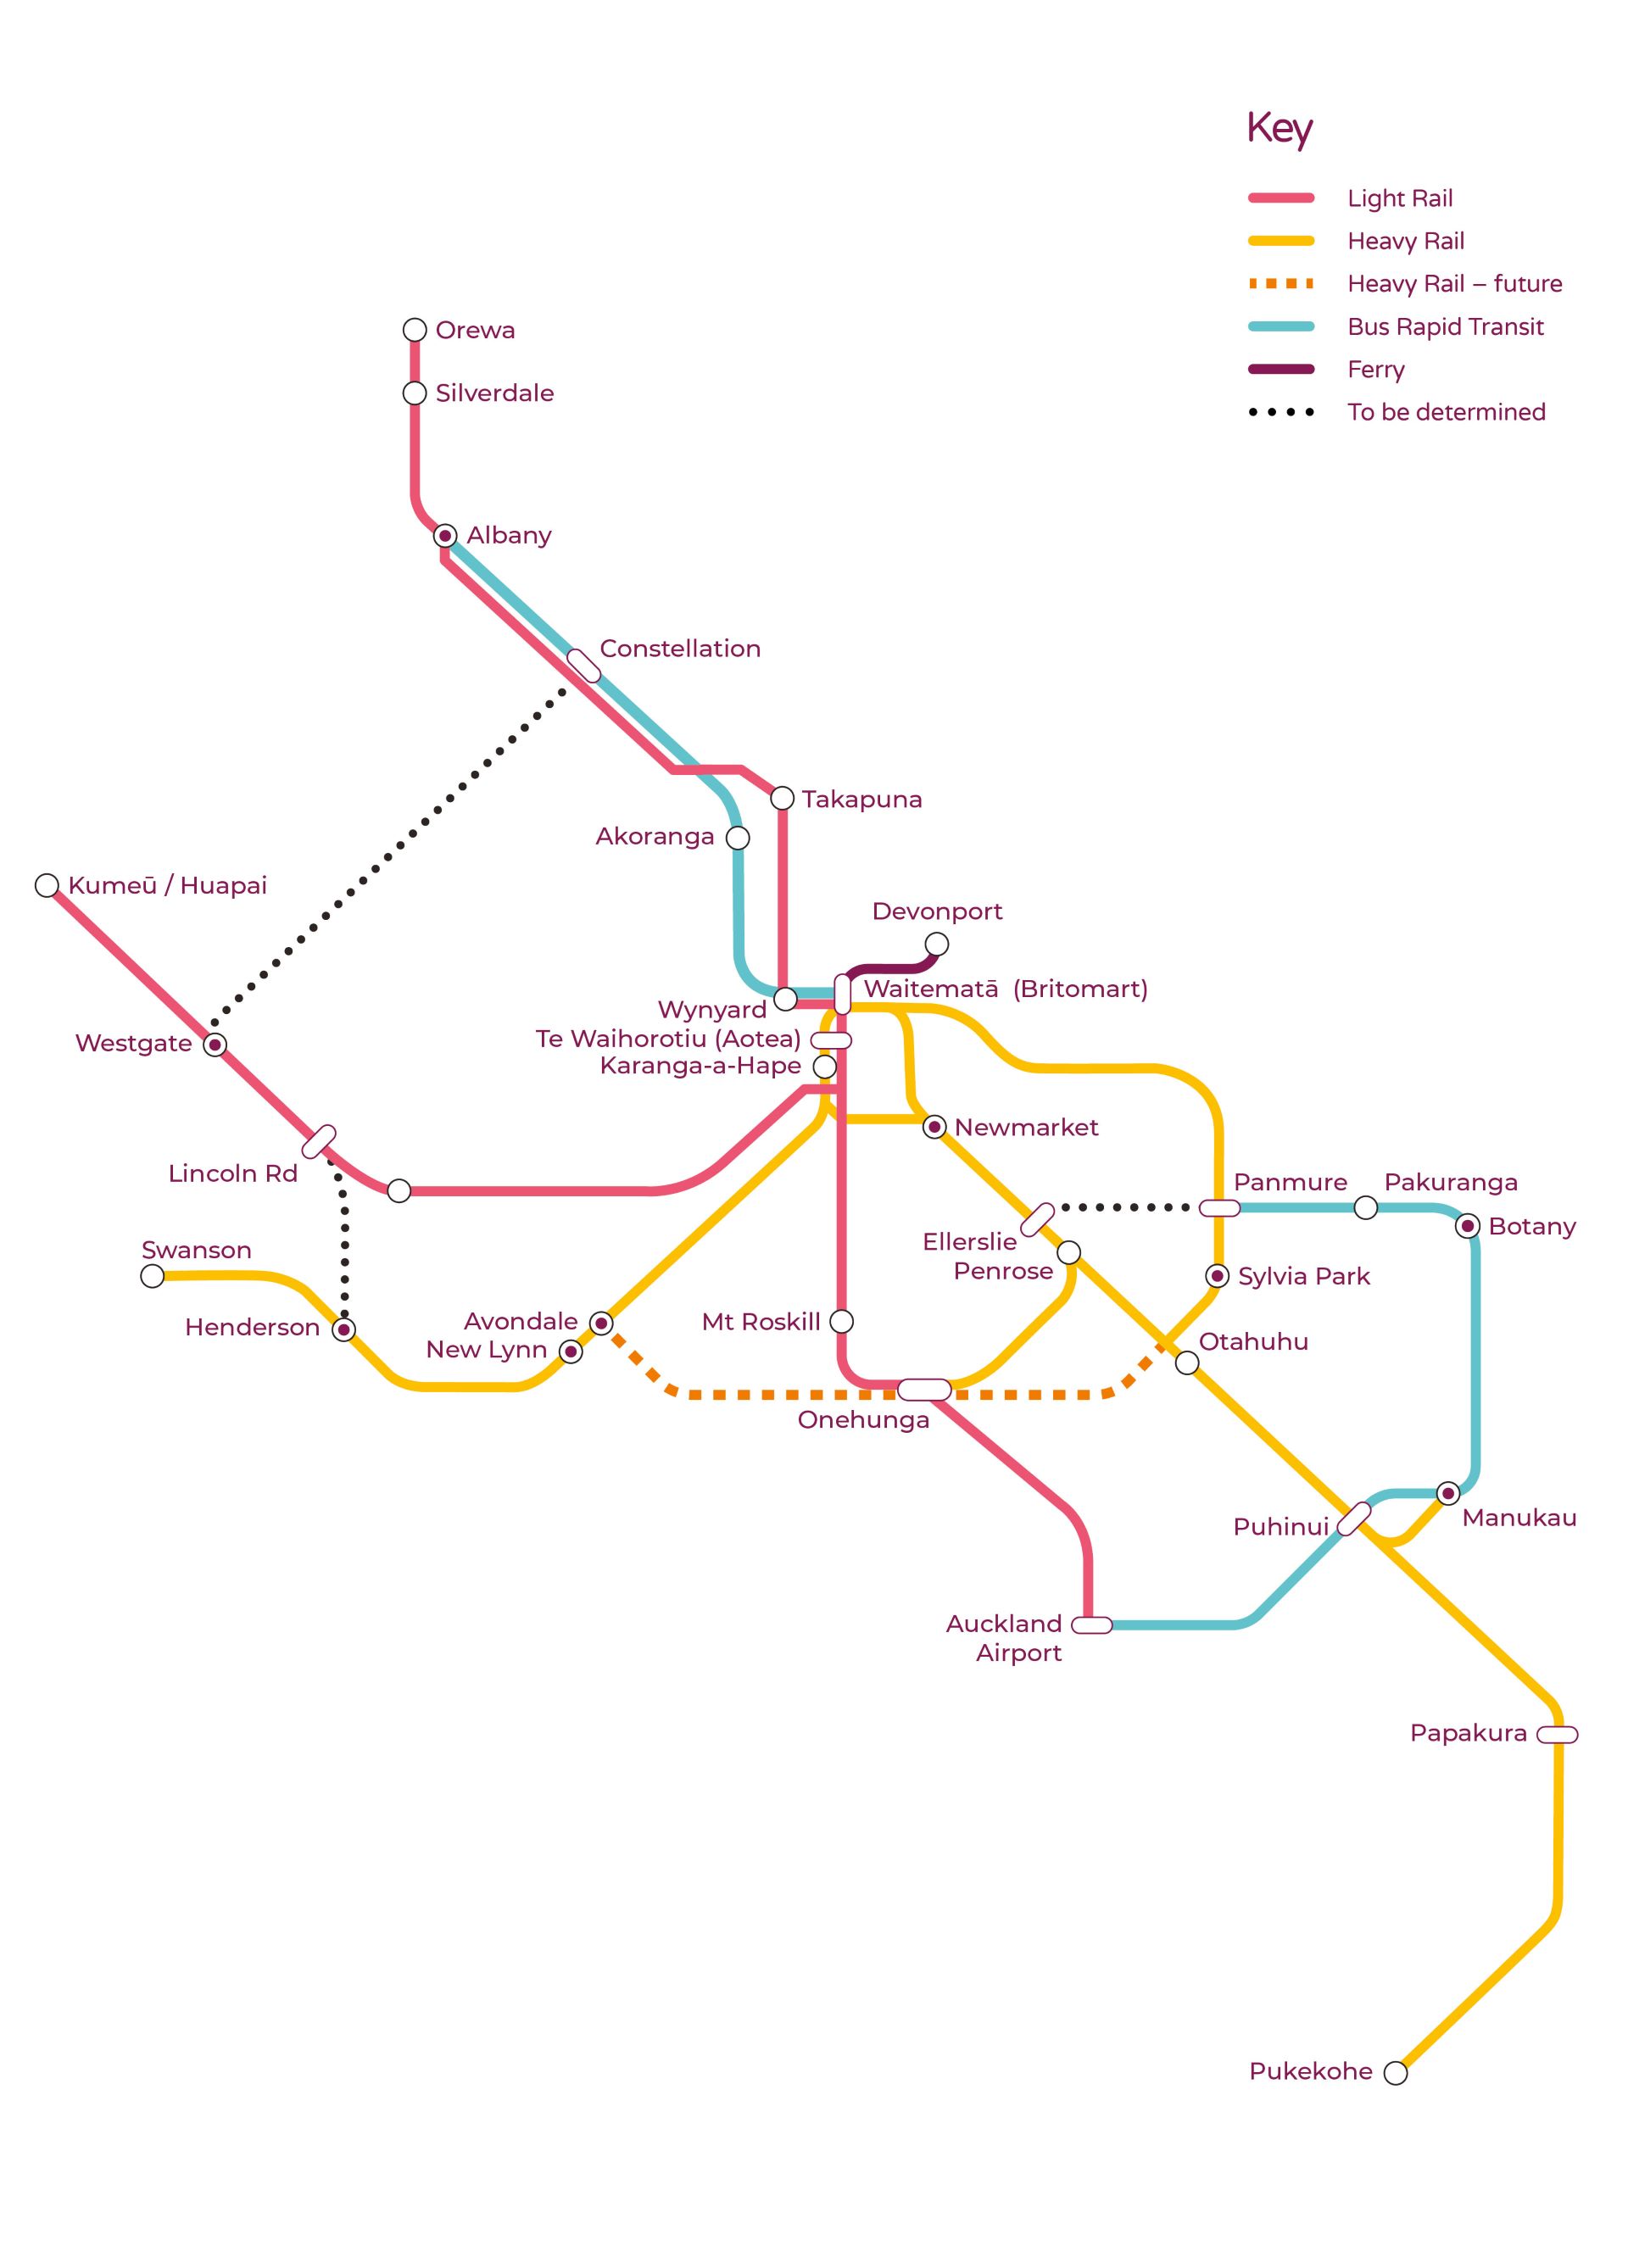 Auckland's future rapid transit network